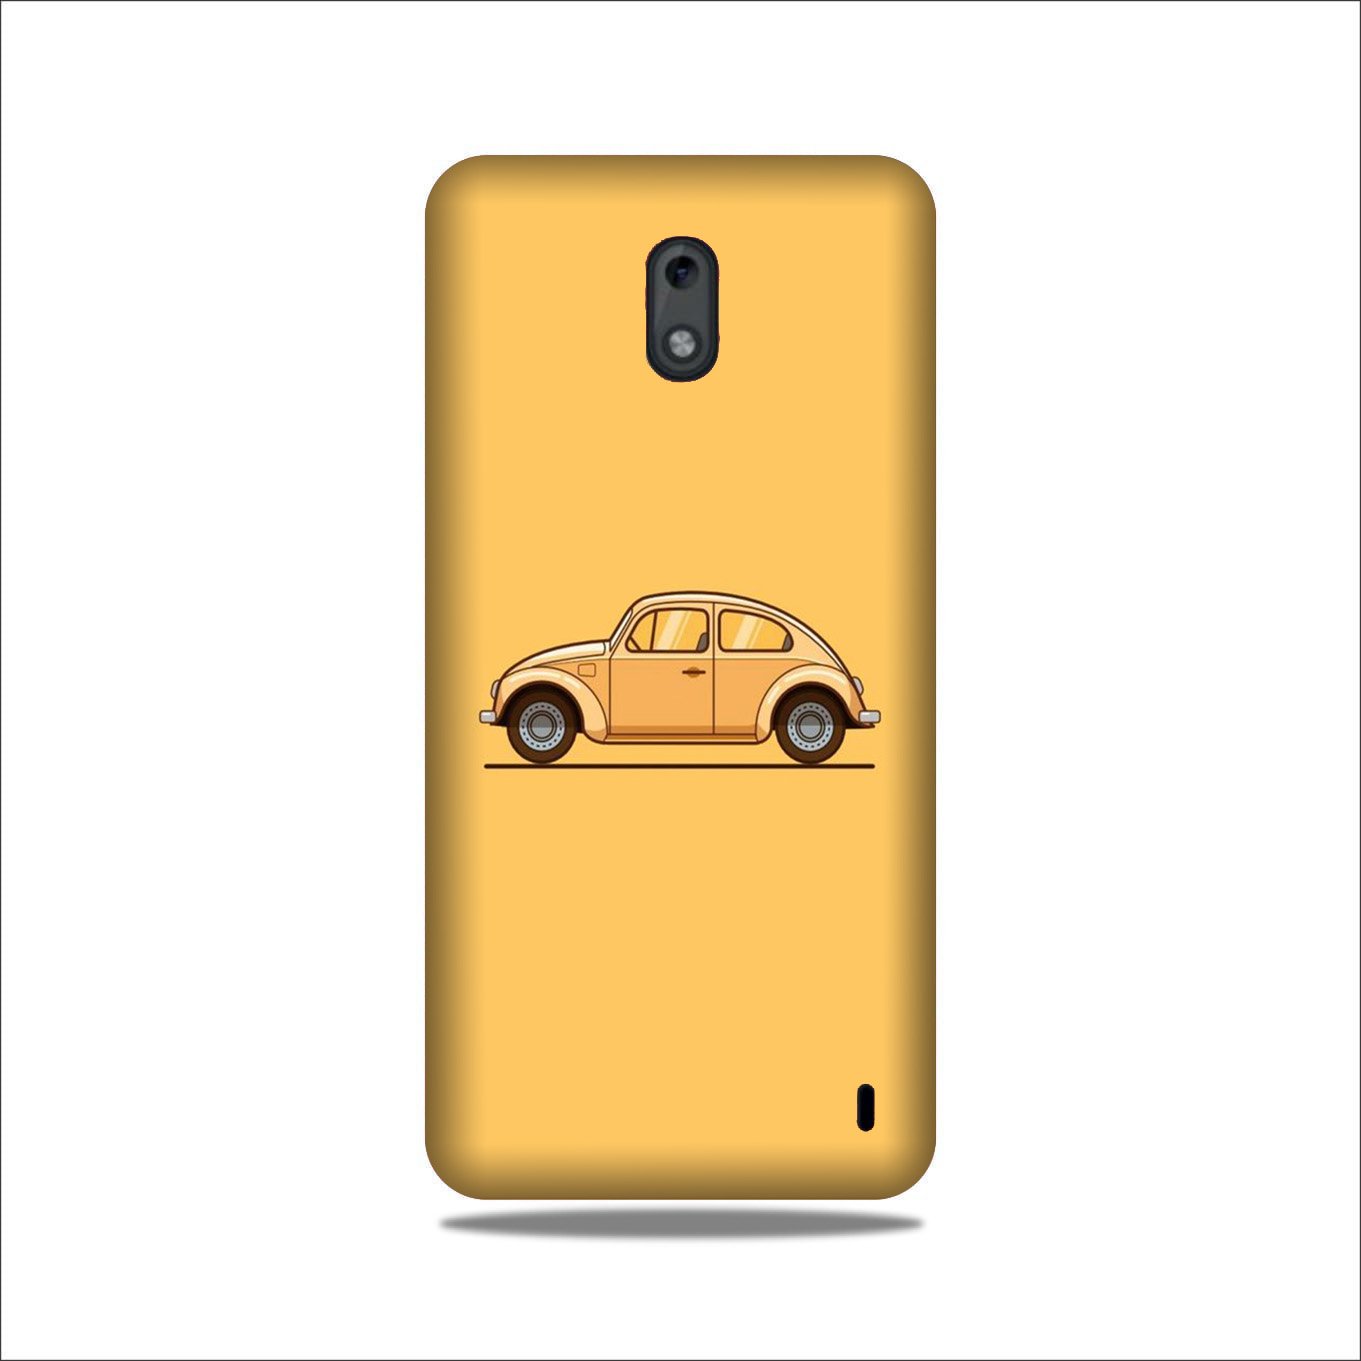 Vintage Car Case for Nokia 2.2 (Design No. 262)